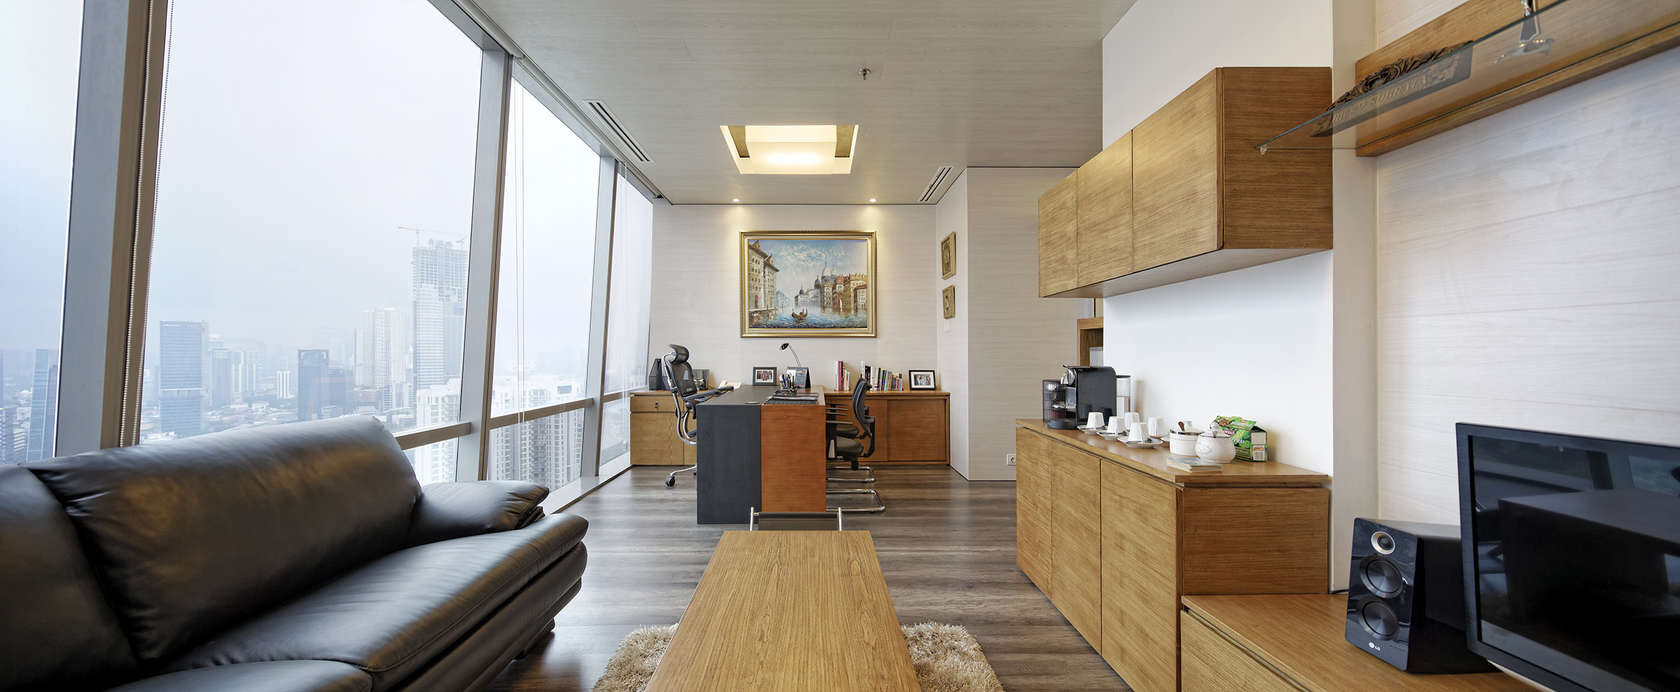 Z North Studio - Commercial & Residential Interior Design - Office - zn-s (24).jpg